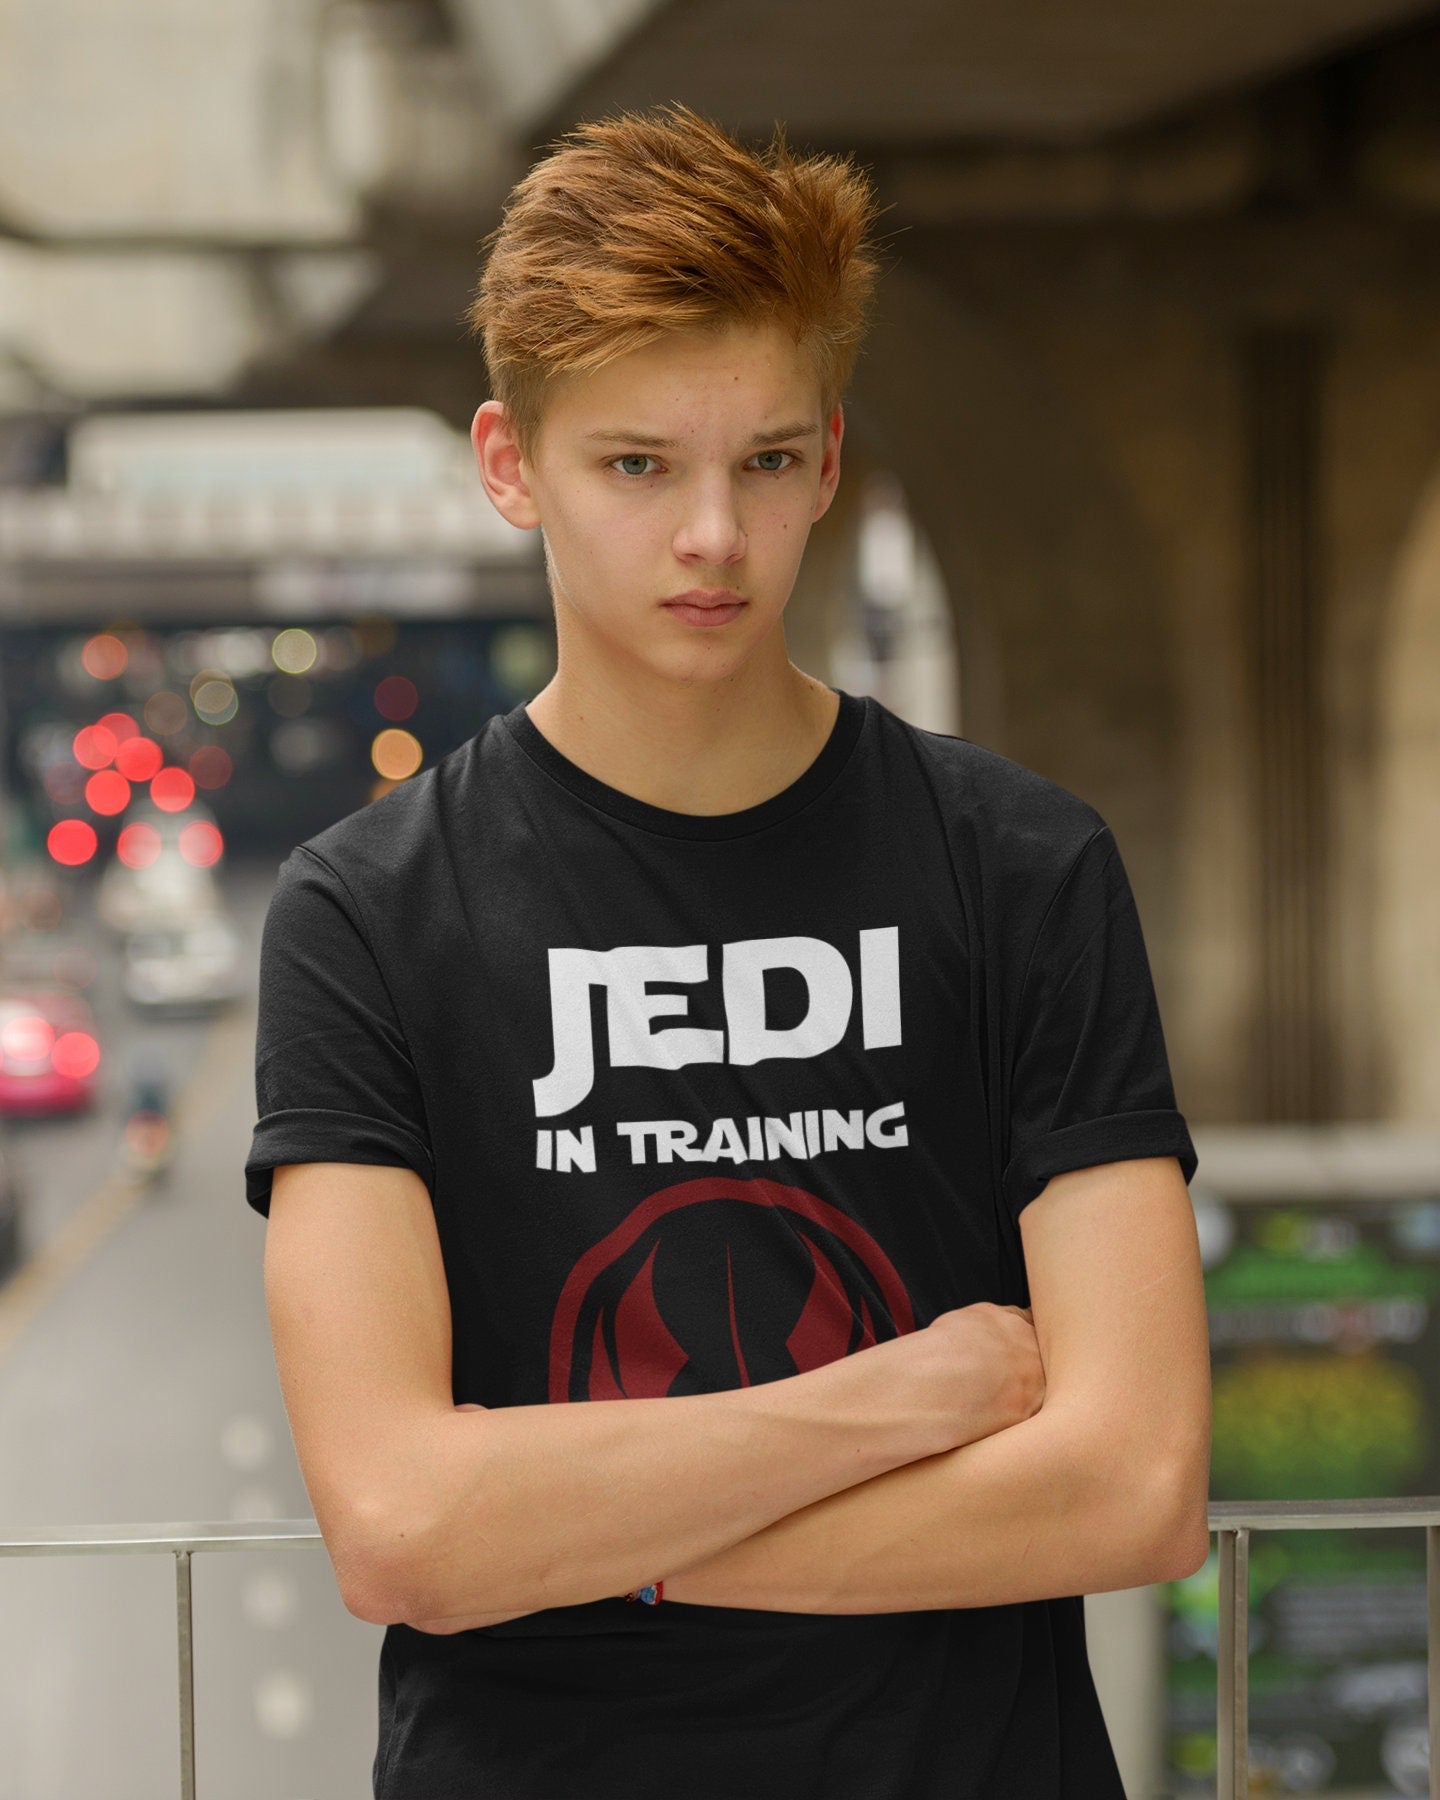 Youth Girls & Boys-Jedi In Training Shirt, Disney Vacation Shirt, Jedi Shirt, Youth Boys Girls Shirts, Disney Inspired Shirt